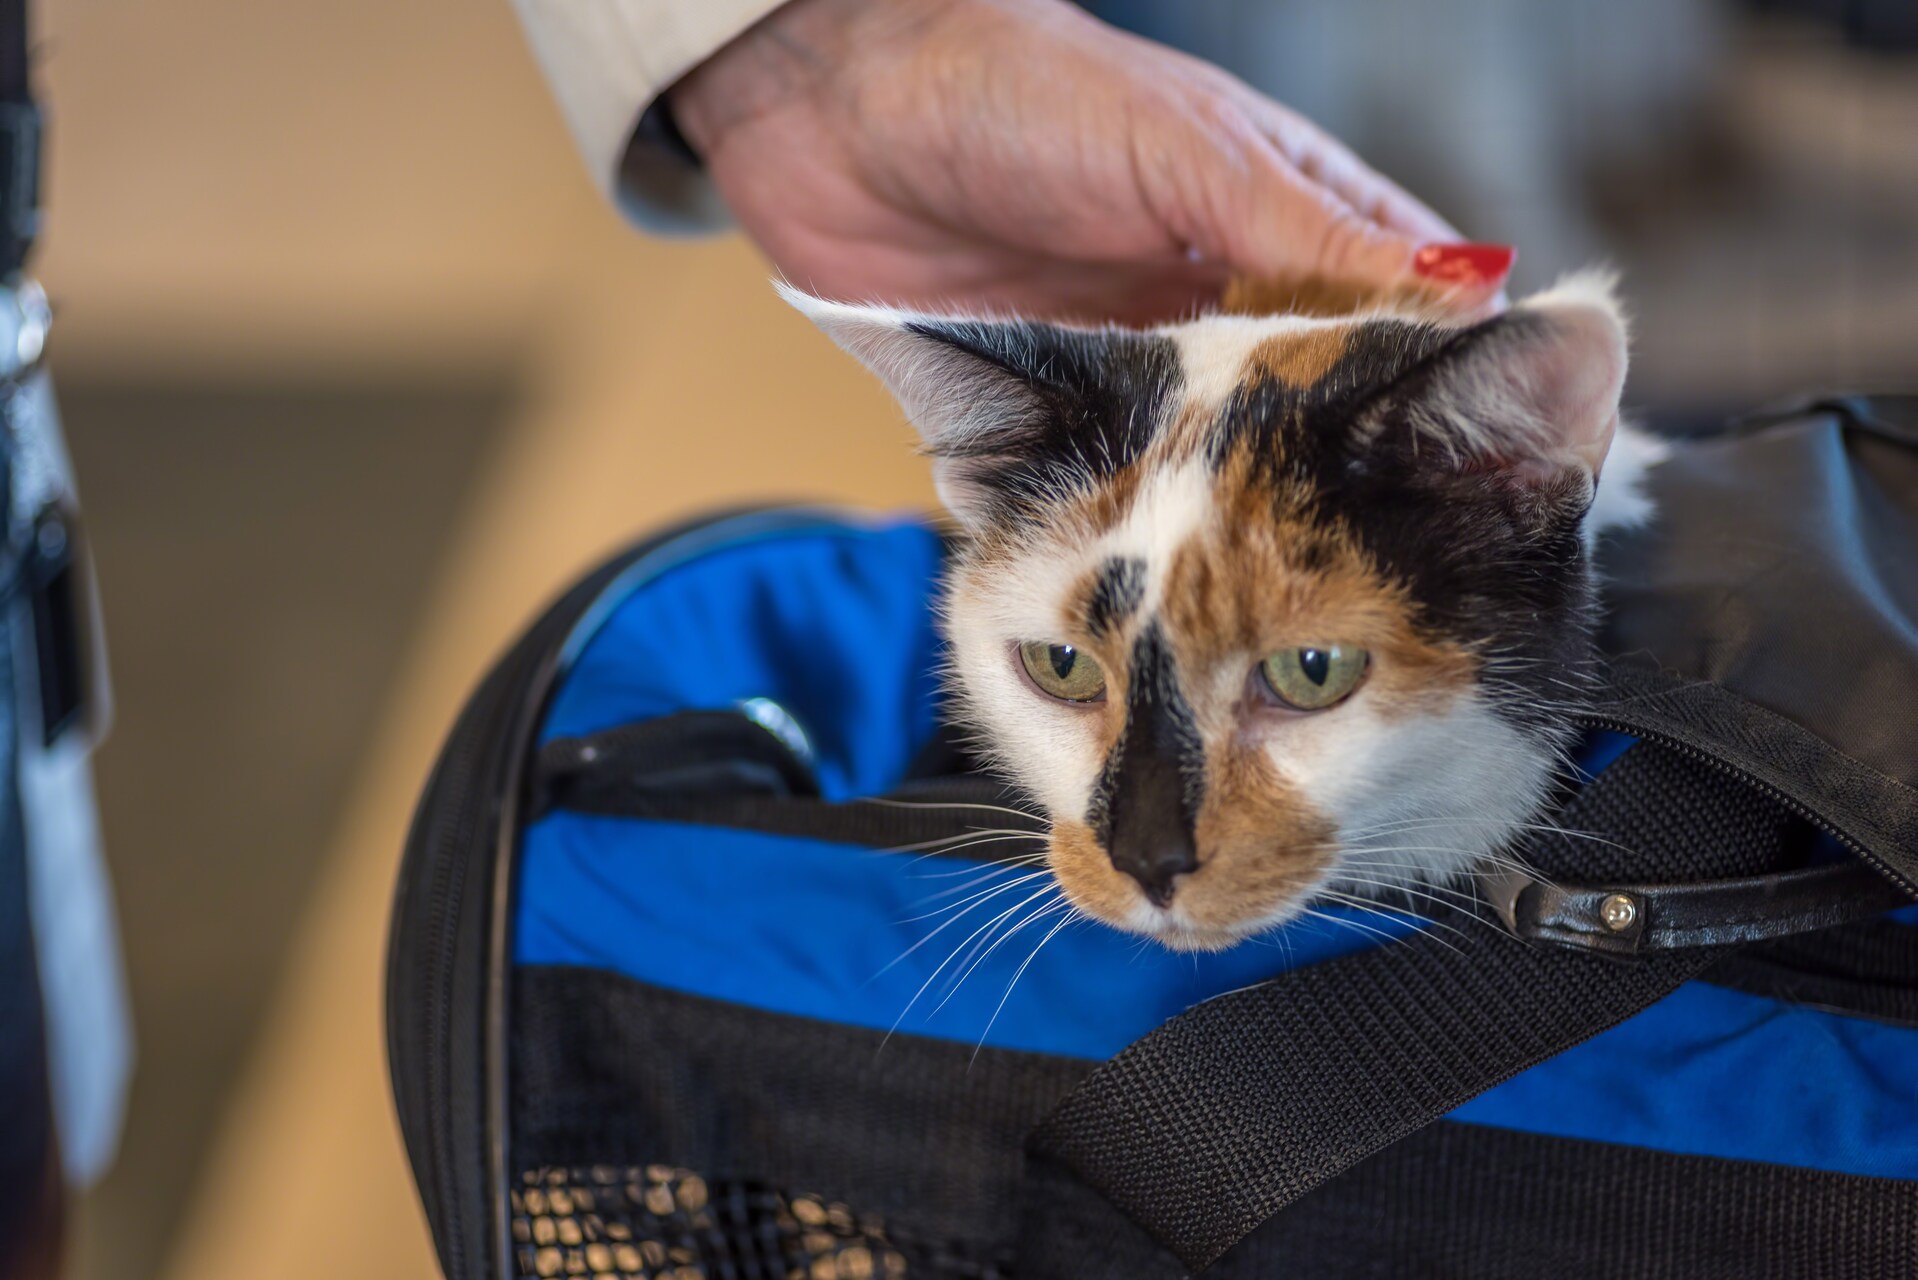 A cat sitting inside a blue duffel bag